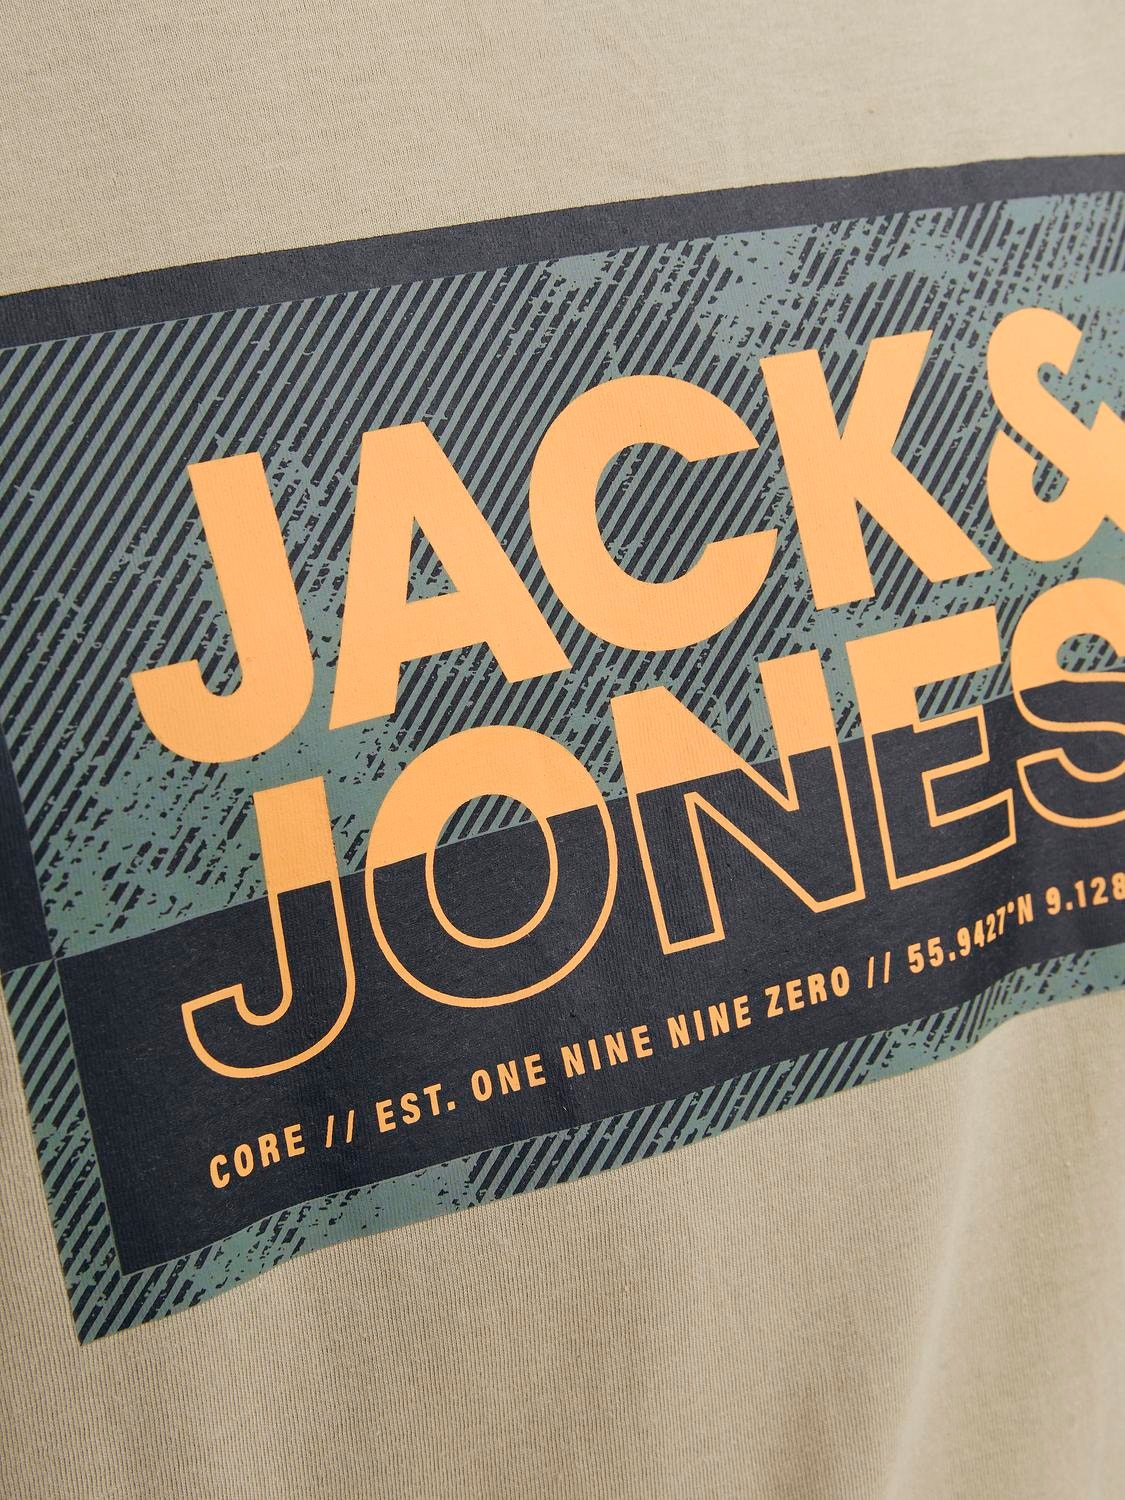 Jack & Jones Logo Rundhals T-shirt -Crockery - 12253442